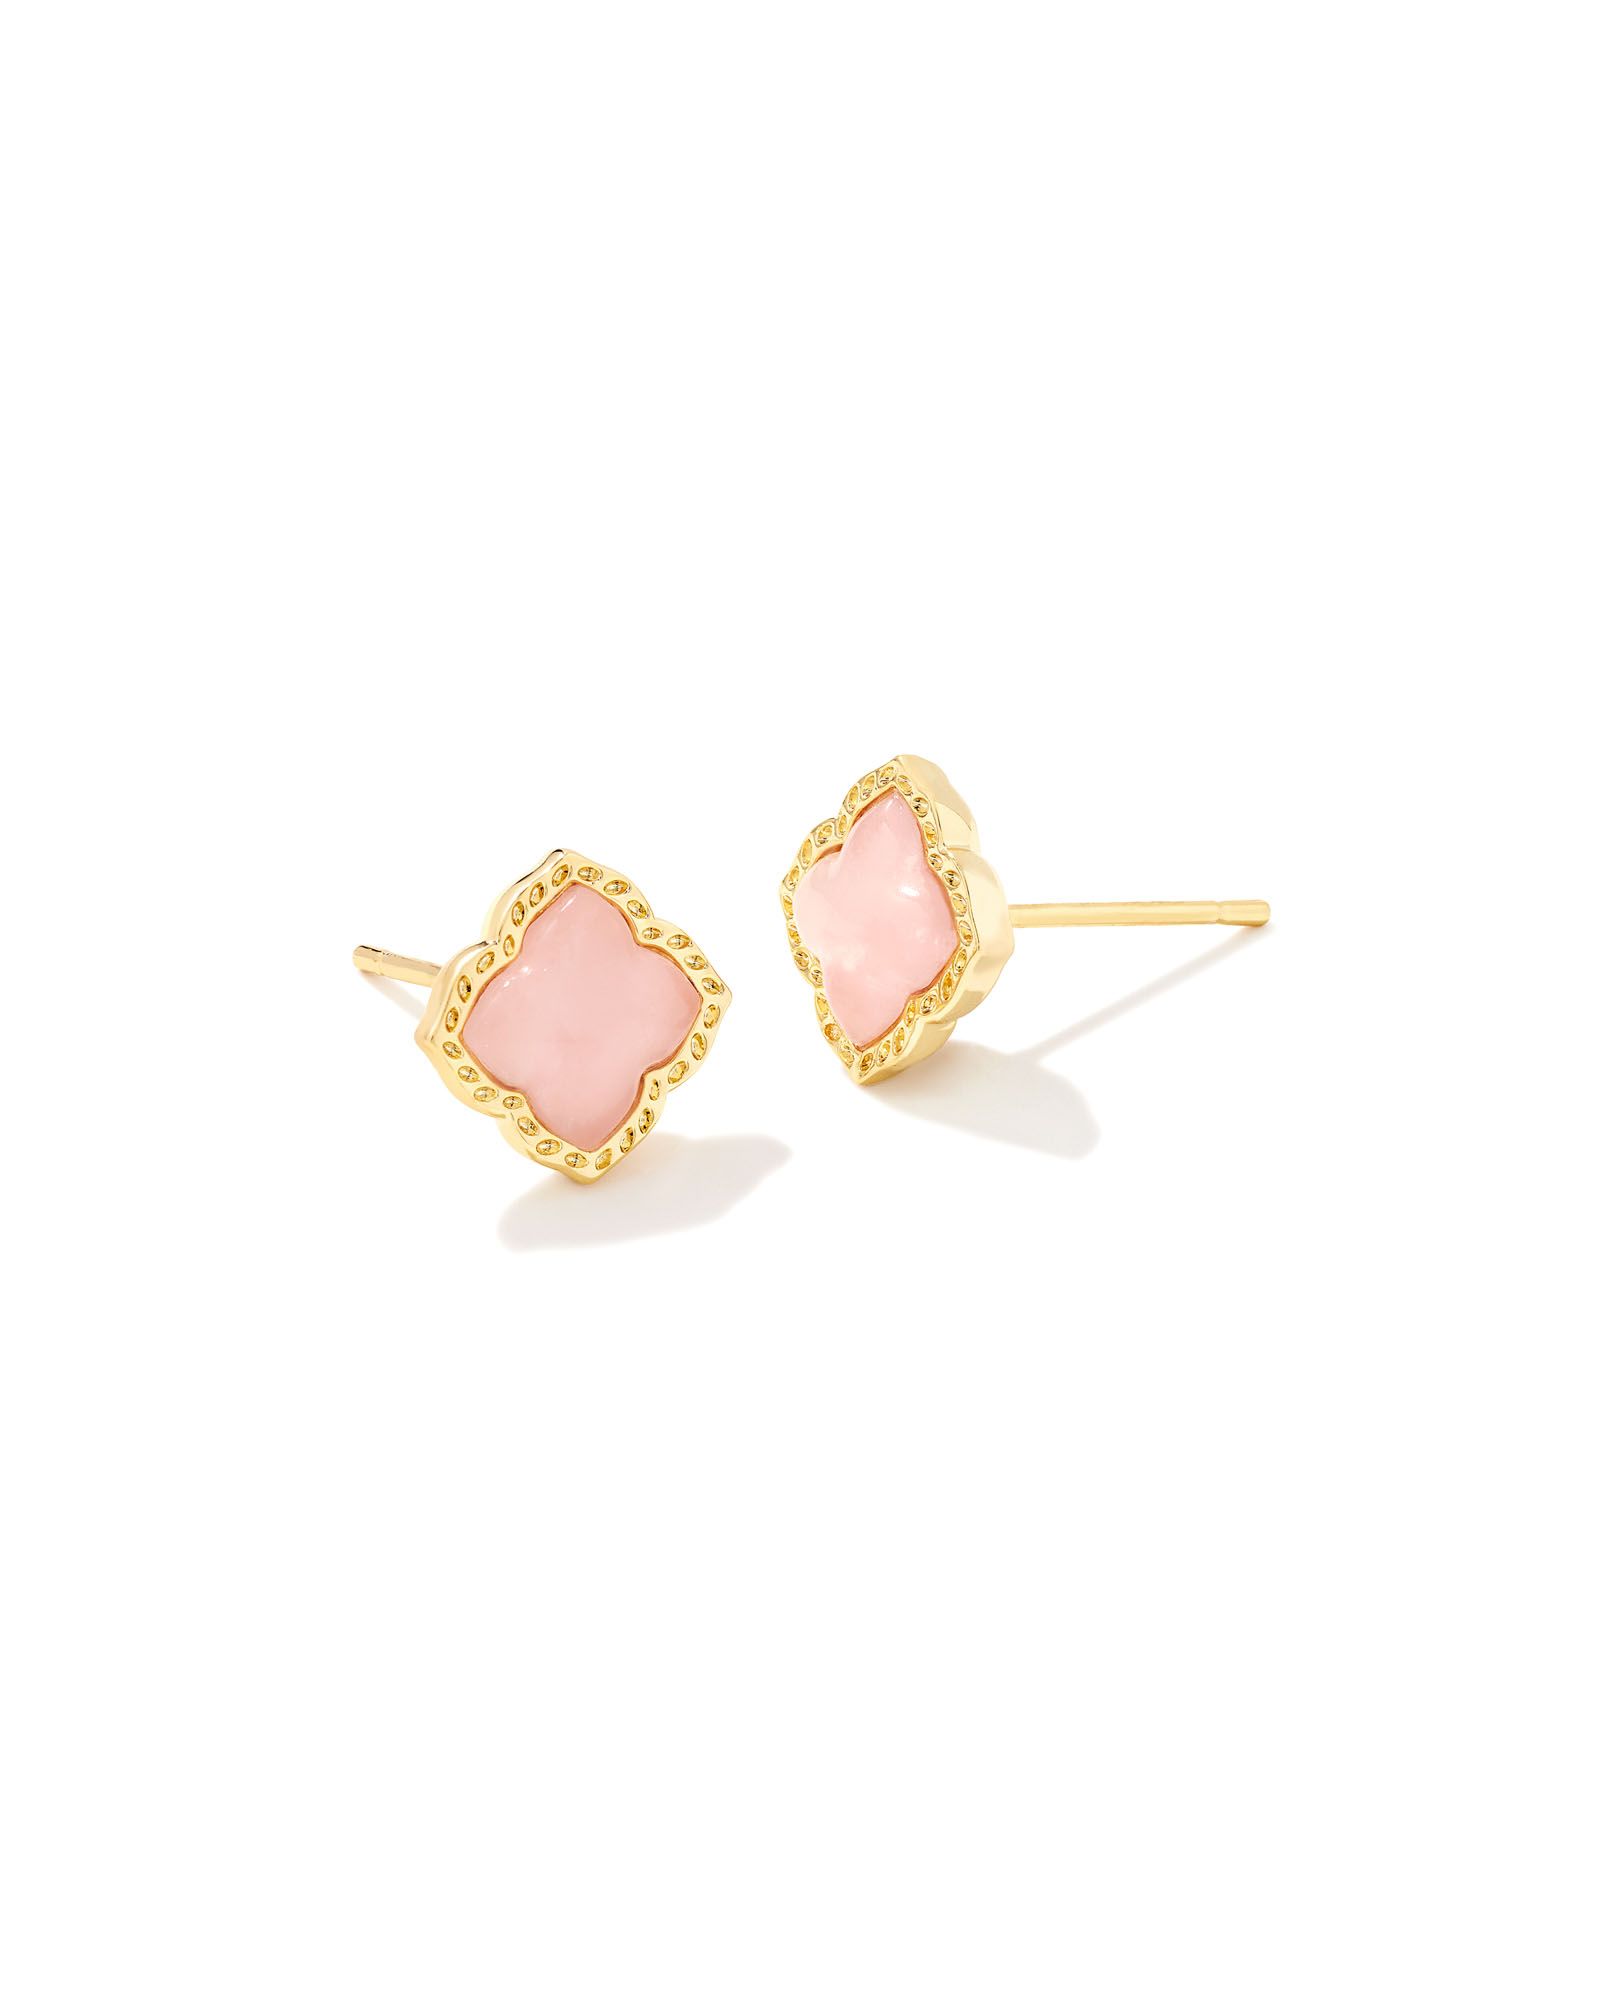 Mallory Gold Stud Earrings in Rose Quartz | Kendra Scott